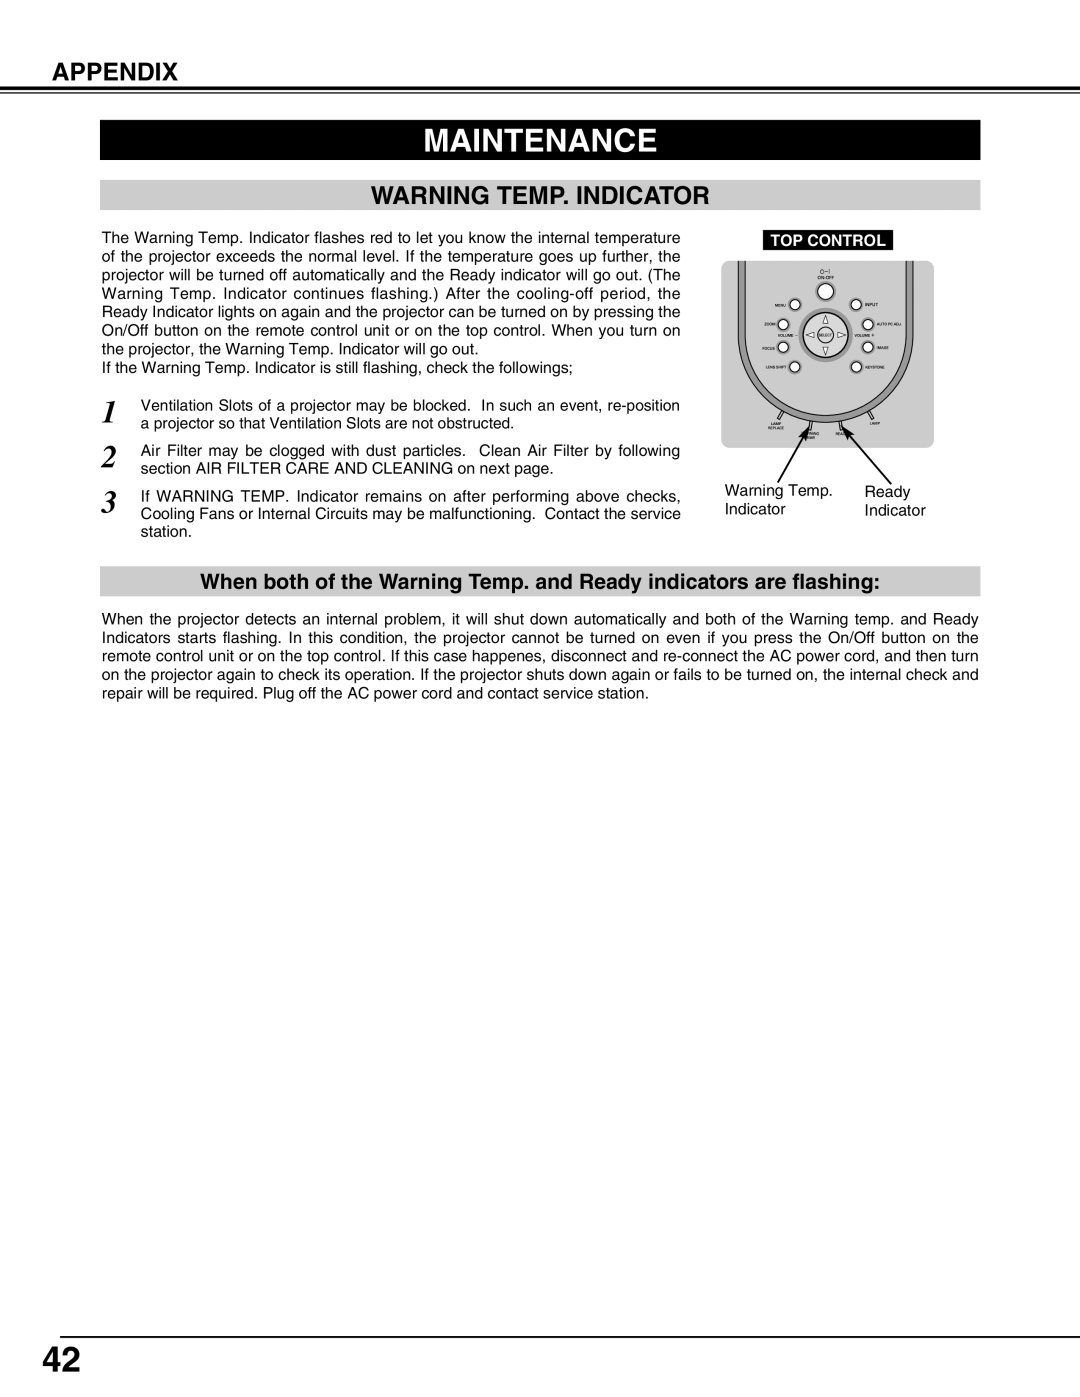 Eiki LC-X60 instruction manual Maintenance, Warning Temp. Indicator, Appendix 